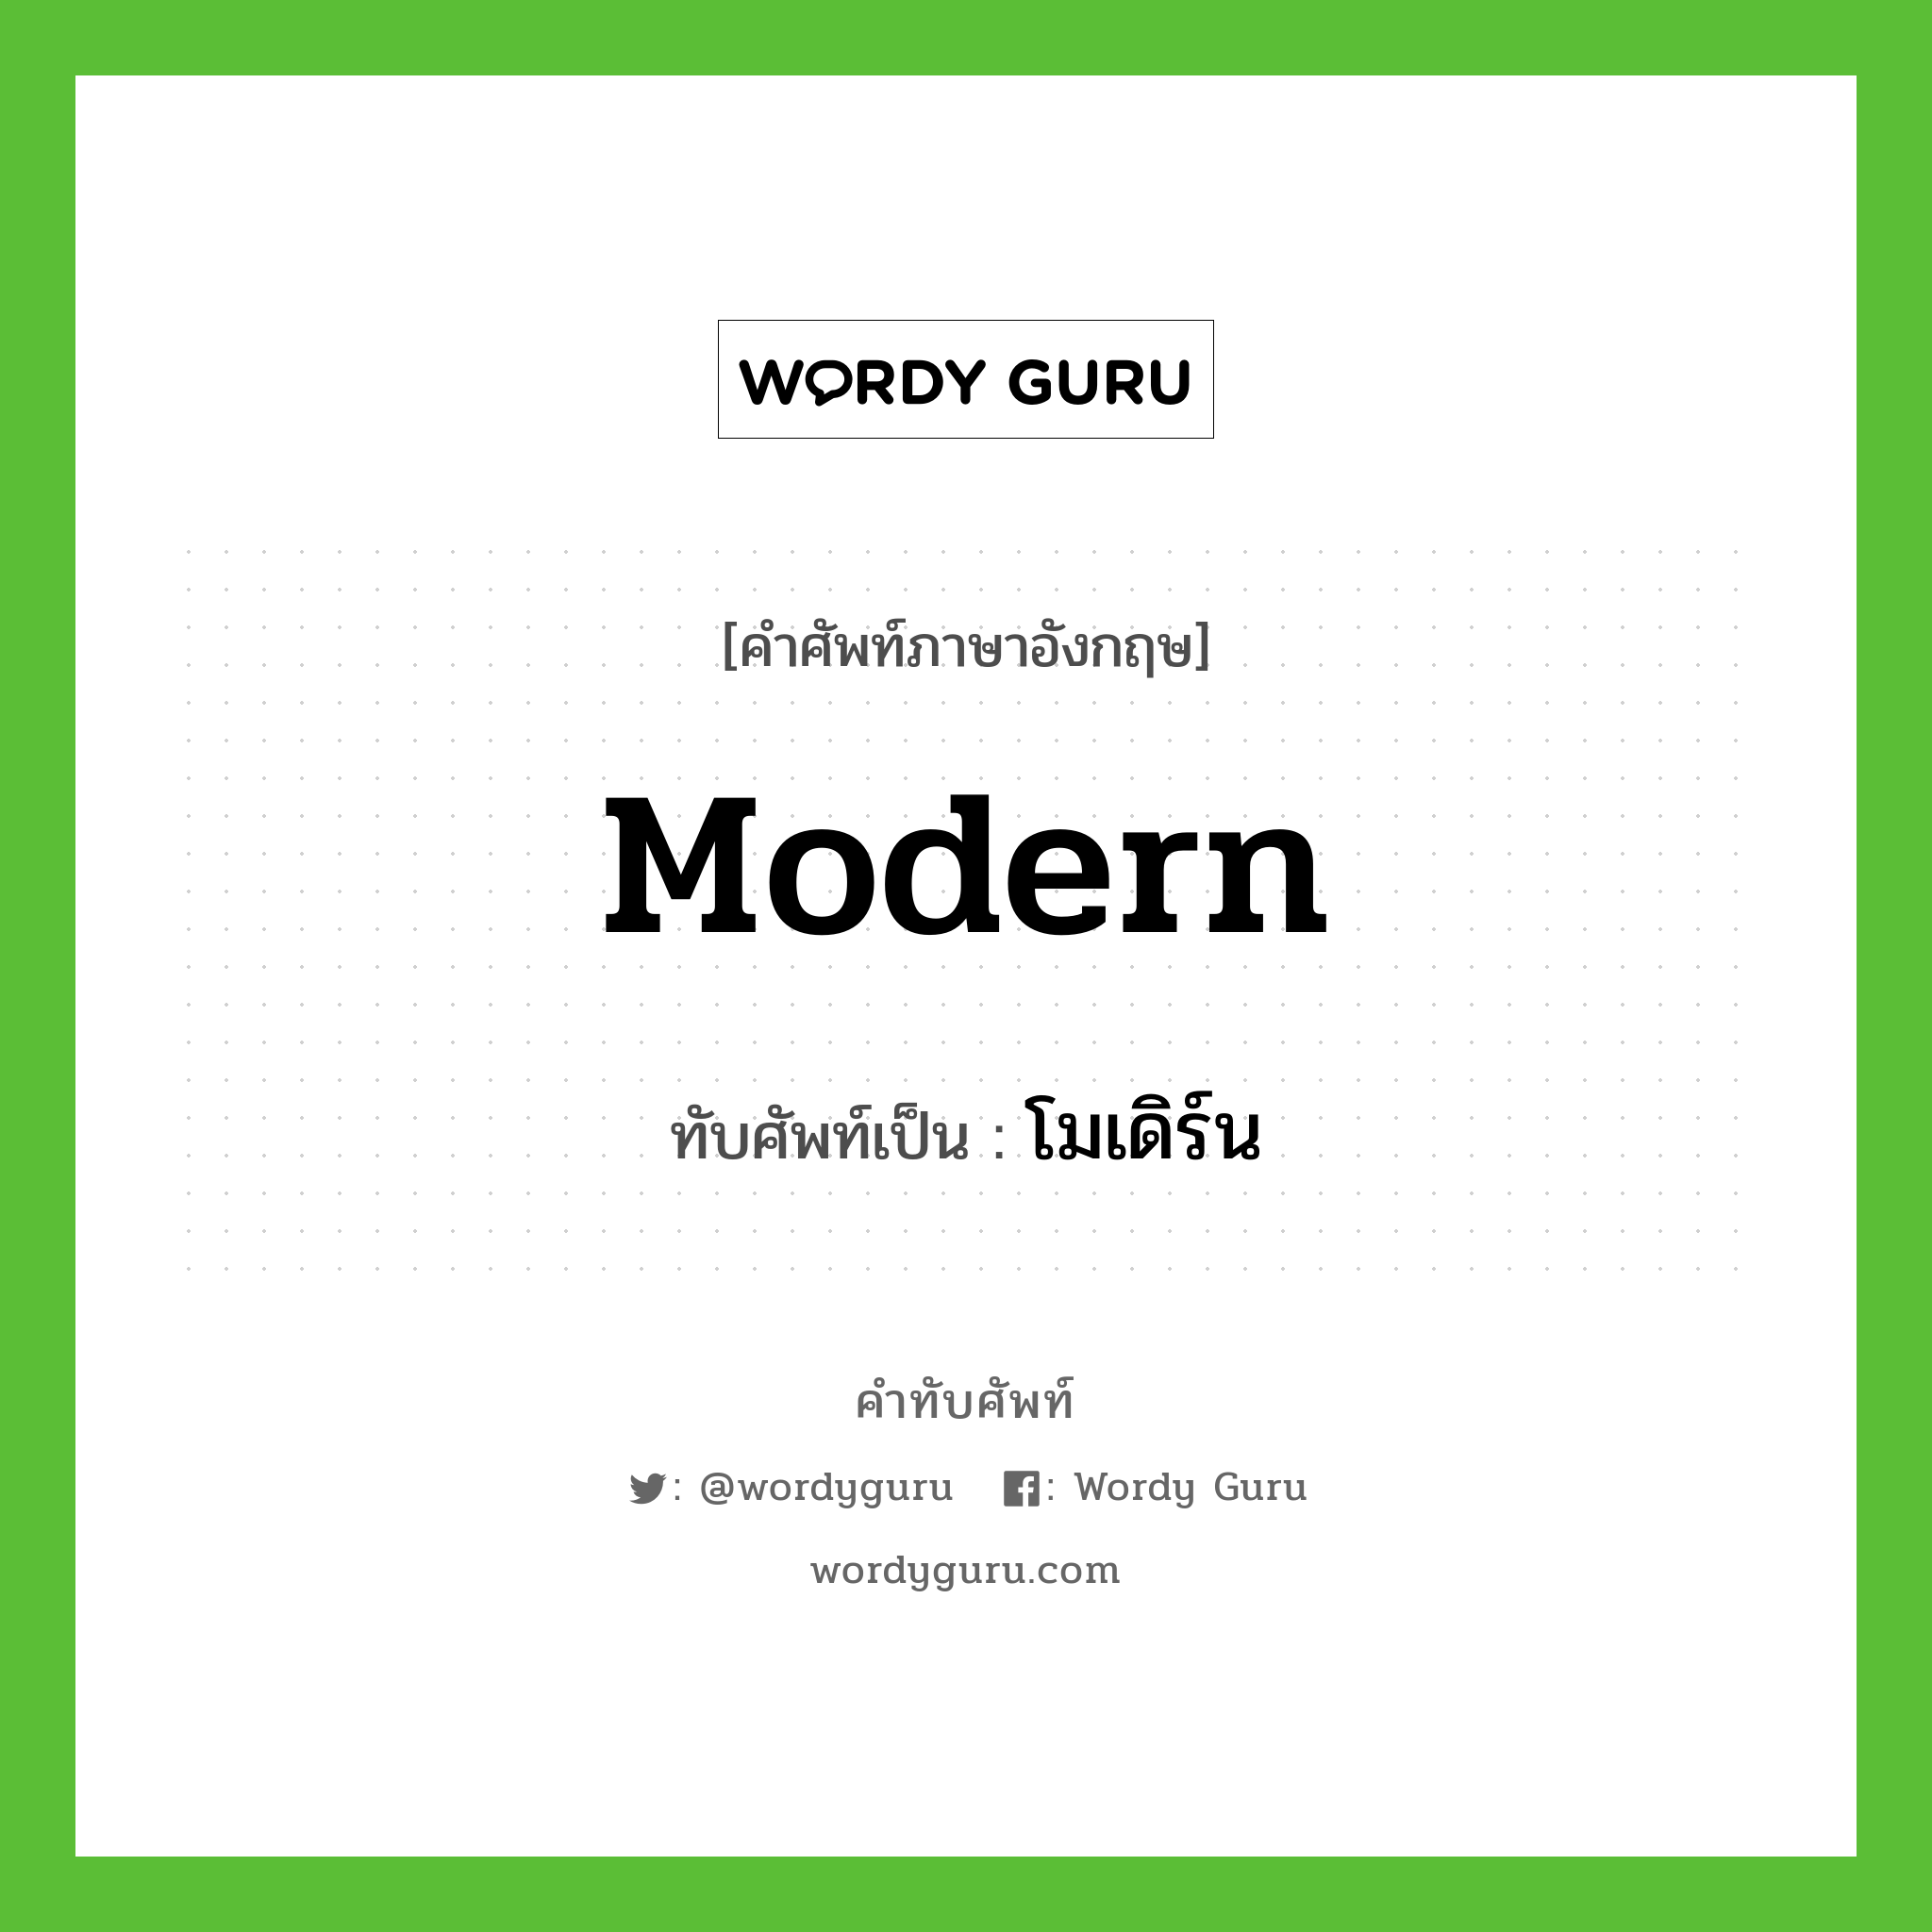 modern เขียนเป็นคำไทยว่าอะไร?, คำศัพท์ภาษาอังกฤษ modern ทับศัพท์เป็น โมเดิร์น